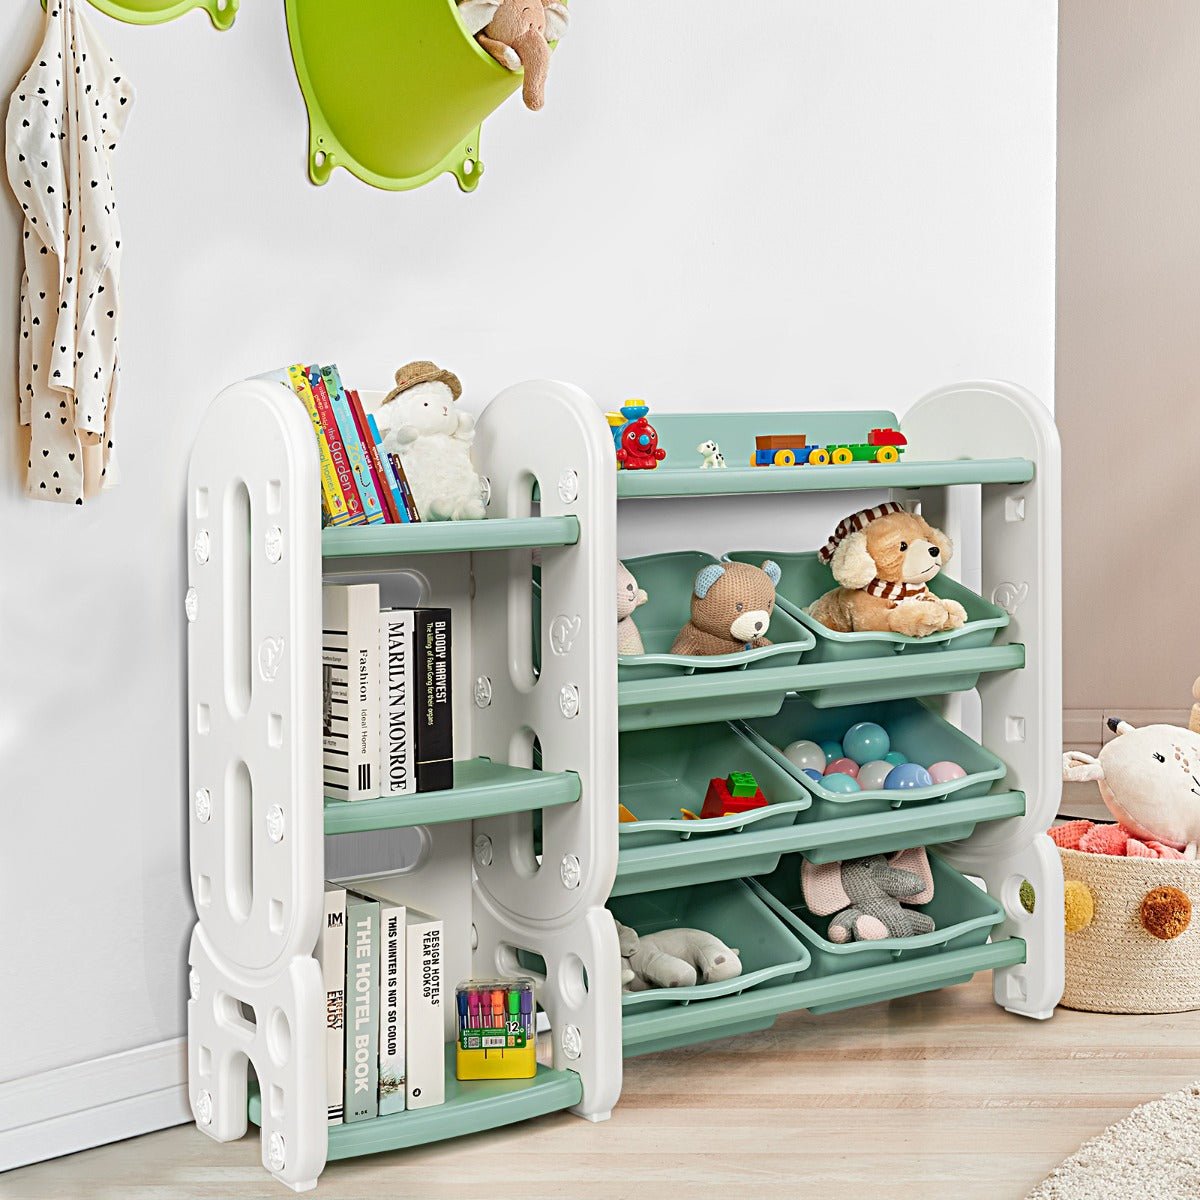 Kids Bedroom Toy Organizer and Bookshelf - Refreshing Green Harmony